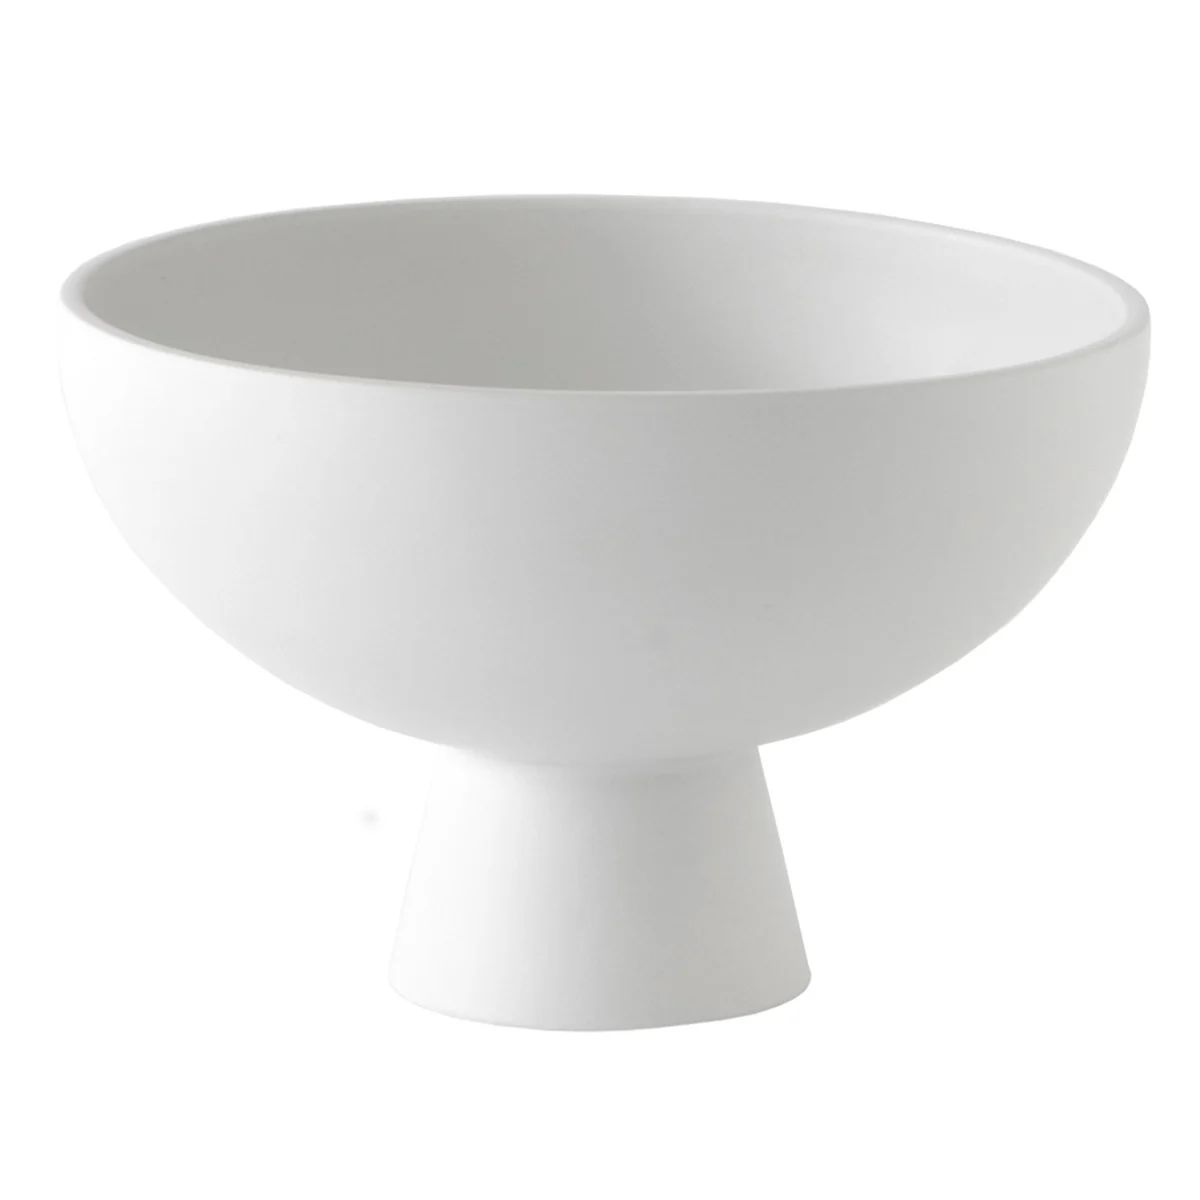 Raawii Strøm bowl, vaporous grey | Finnish Design Shop (FI)